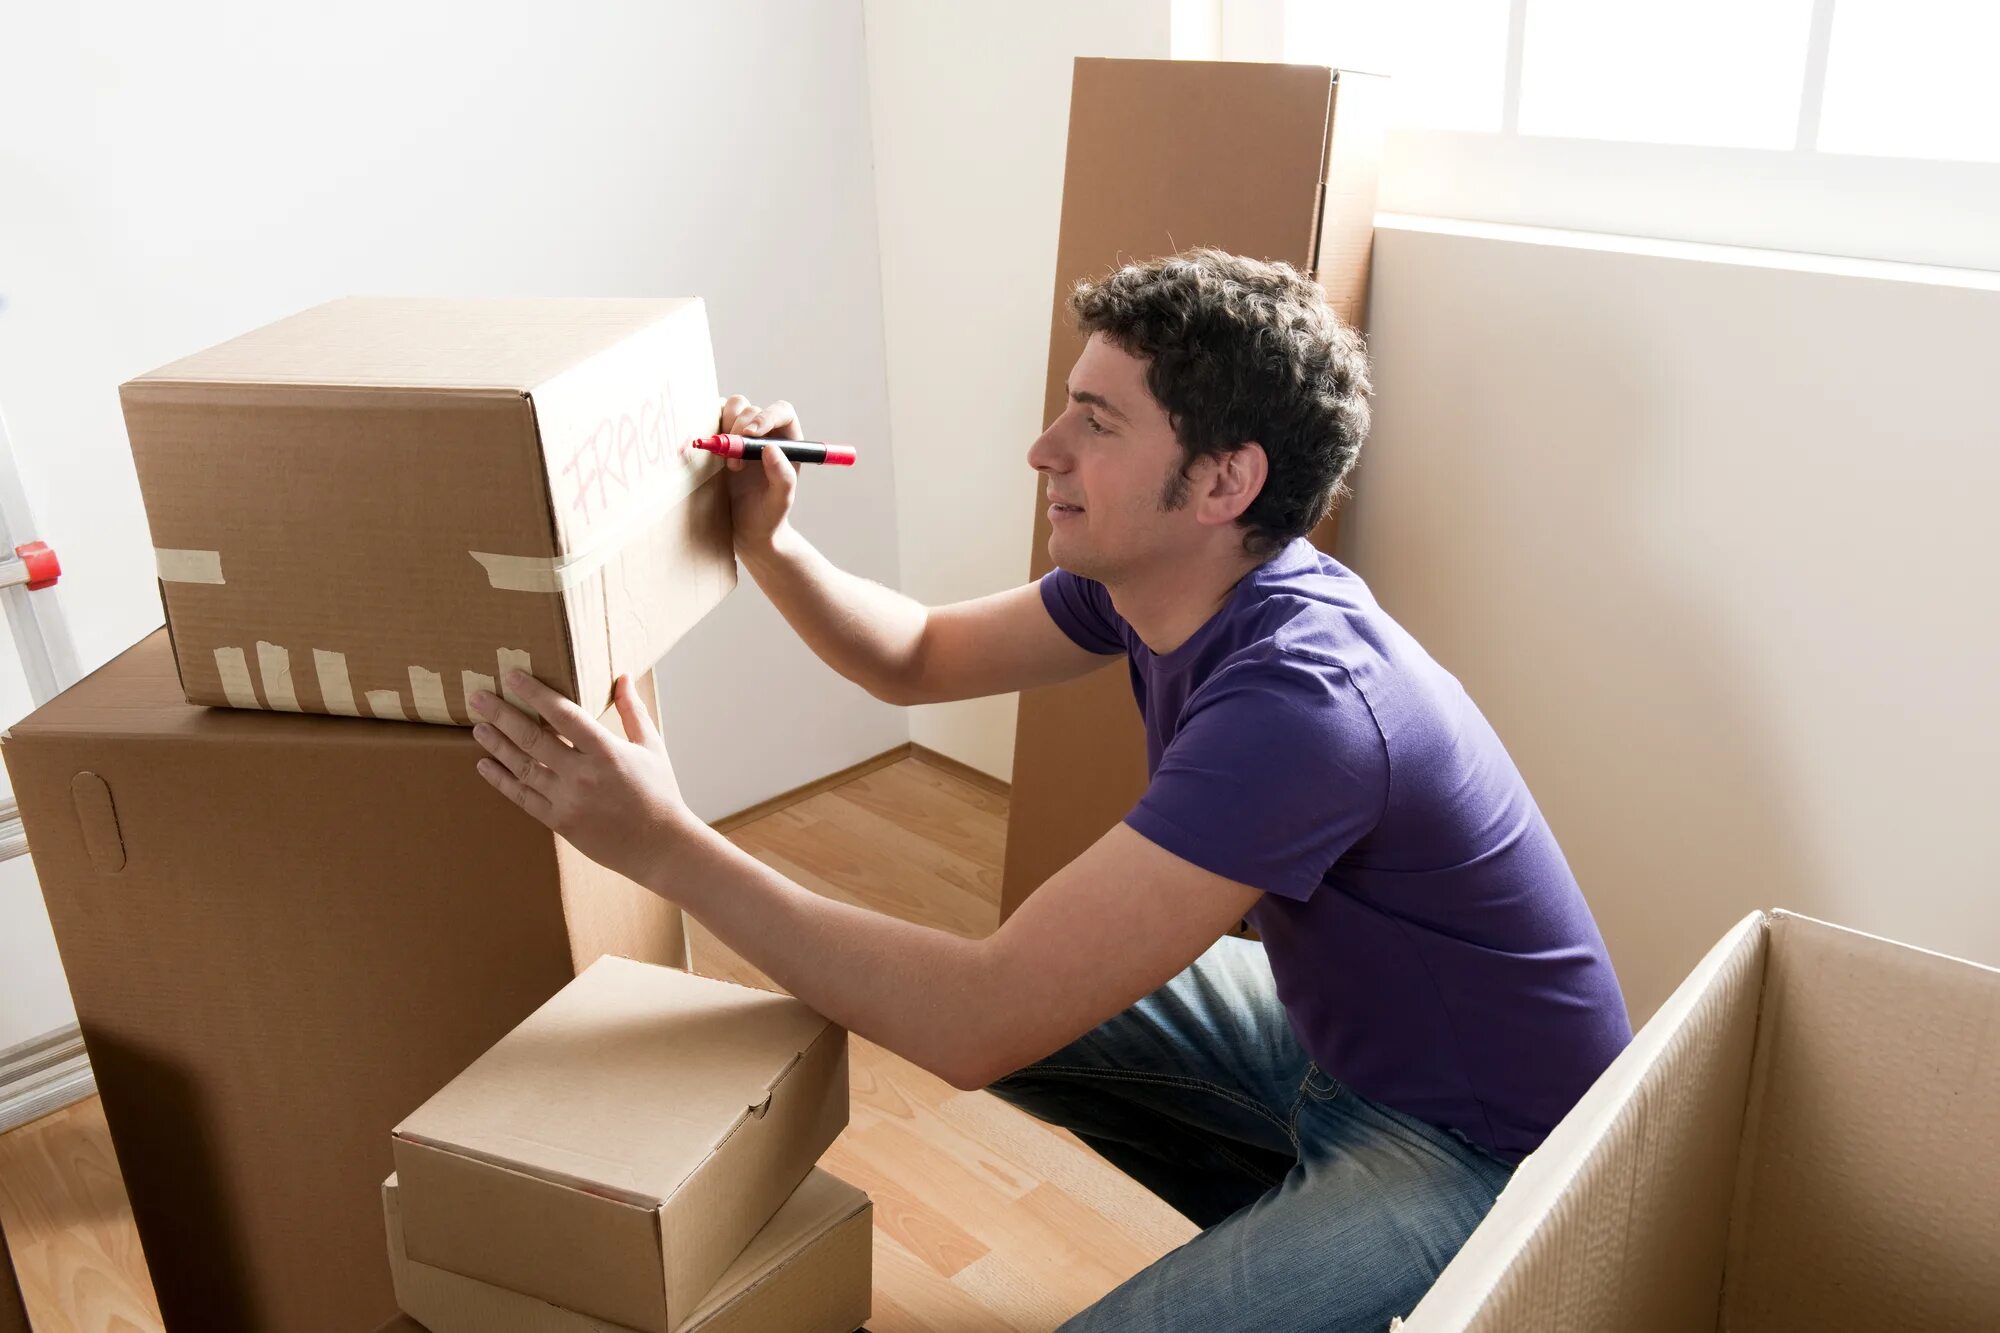 Информация переезжающим. Человек с коробками. Коробки для переезда. Вещи в картонной коробке. Коробки в доме.